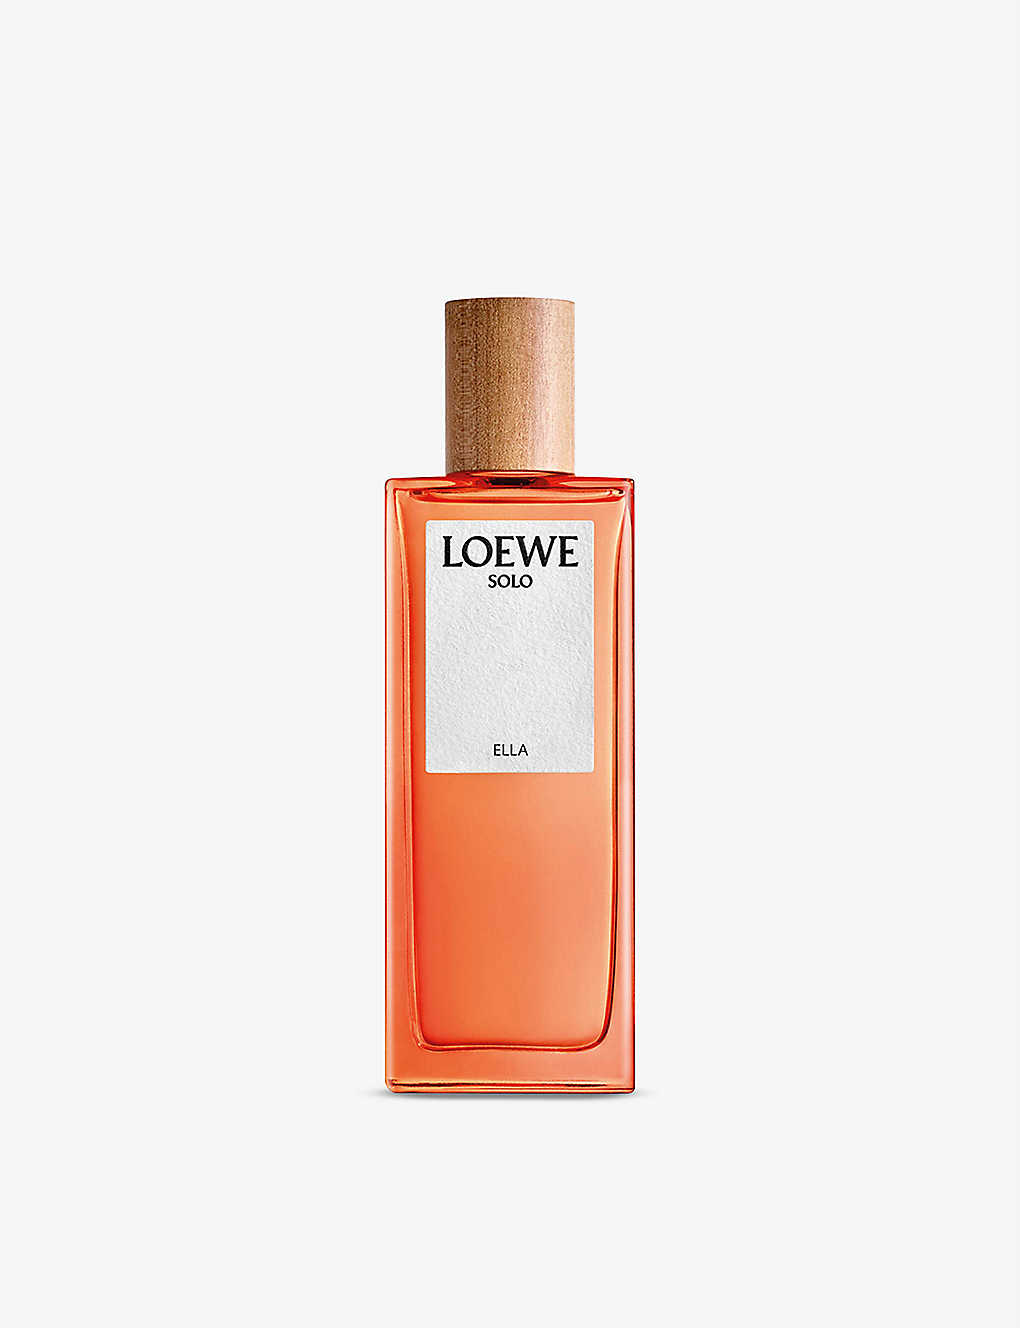 Loewe Solo Ella Eau De Parfum 50ml